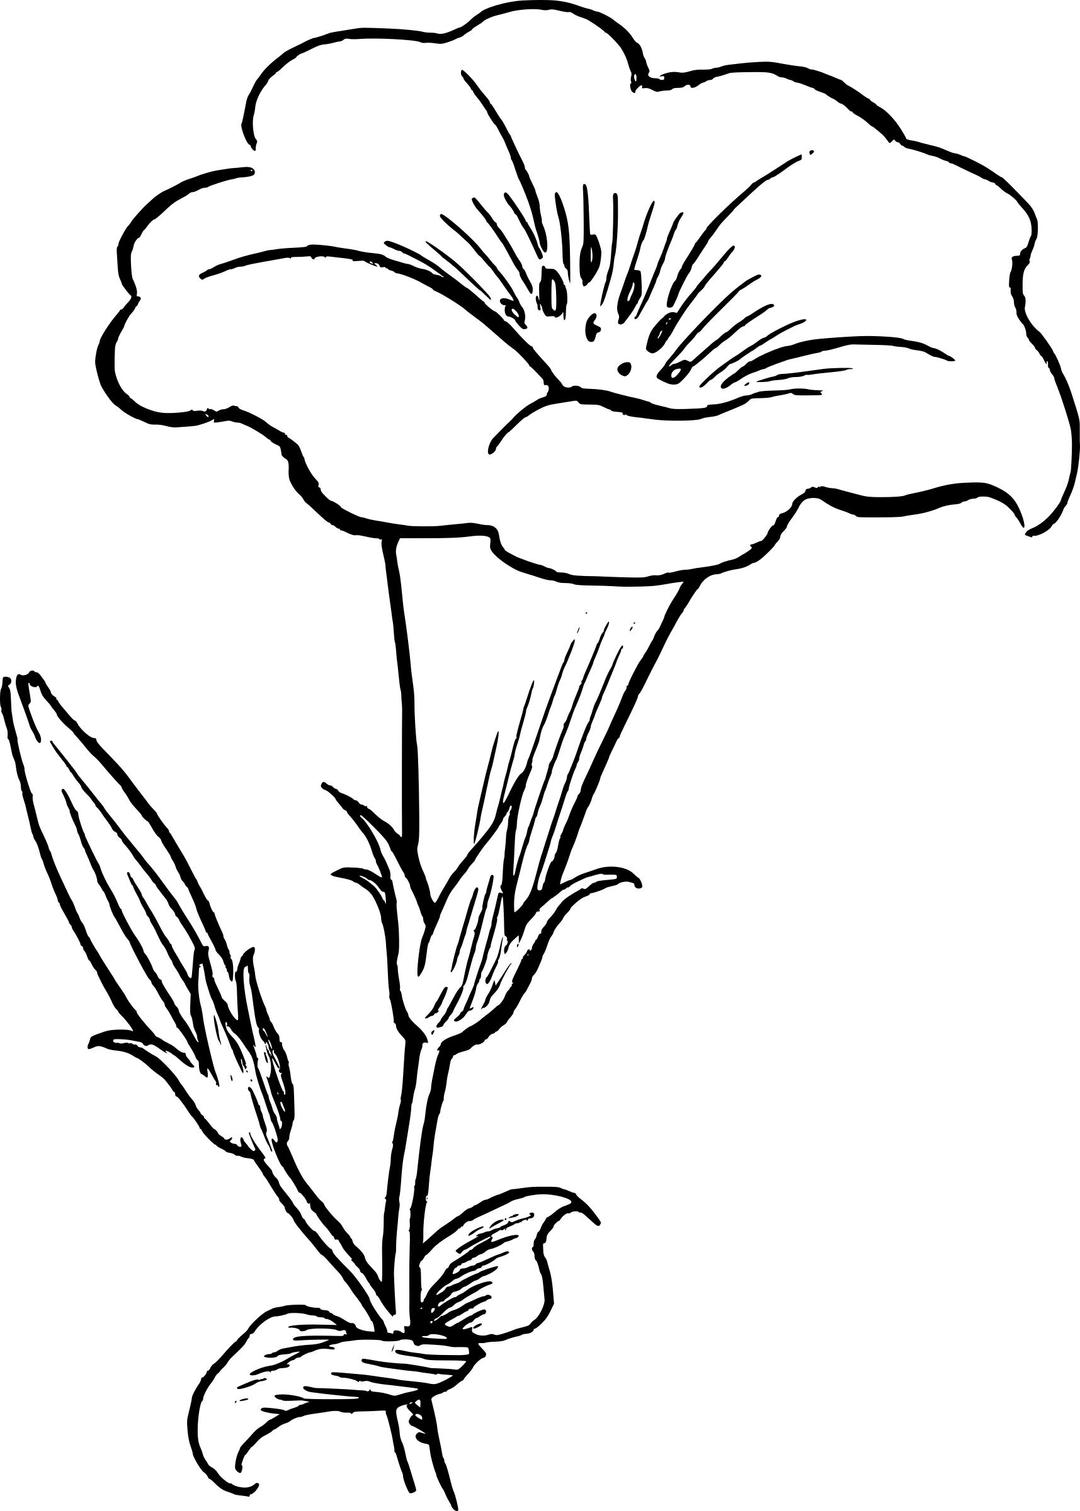 Gamopetalous flower png transparent